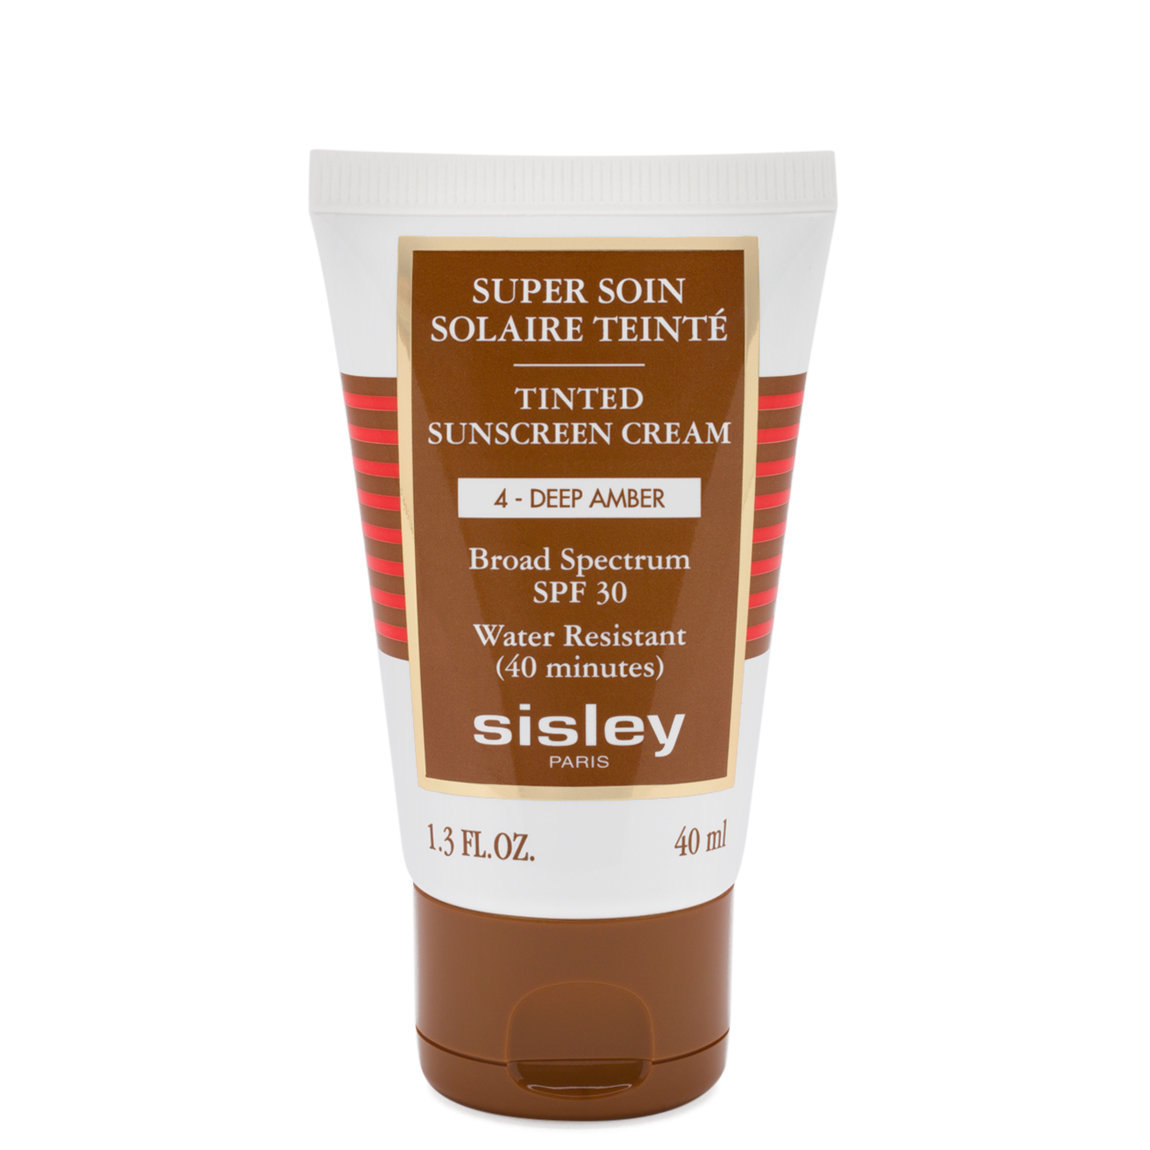 Sisley-Paris Tinted Sunscreen Cream SPF 30 4 Deep Amber alternative view 1.